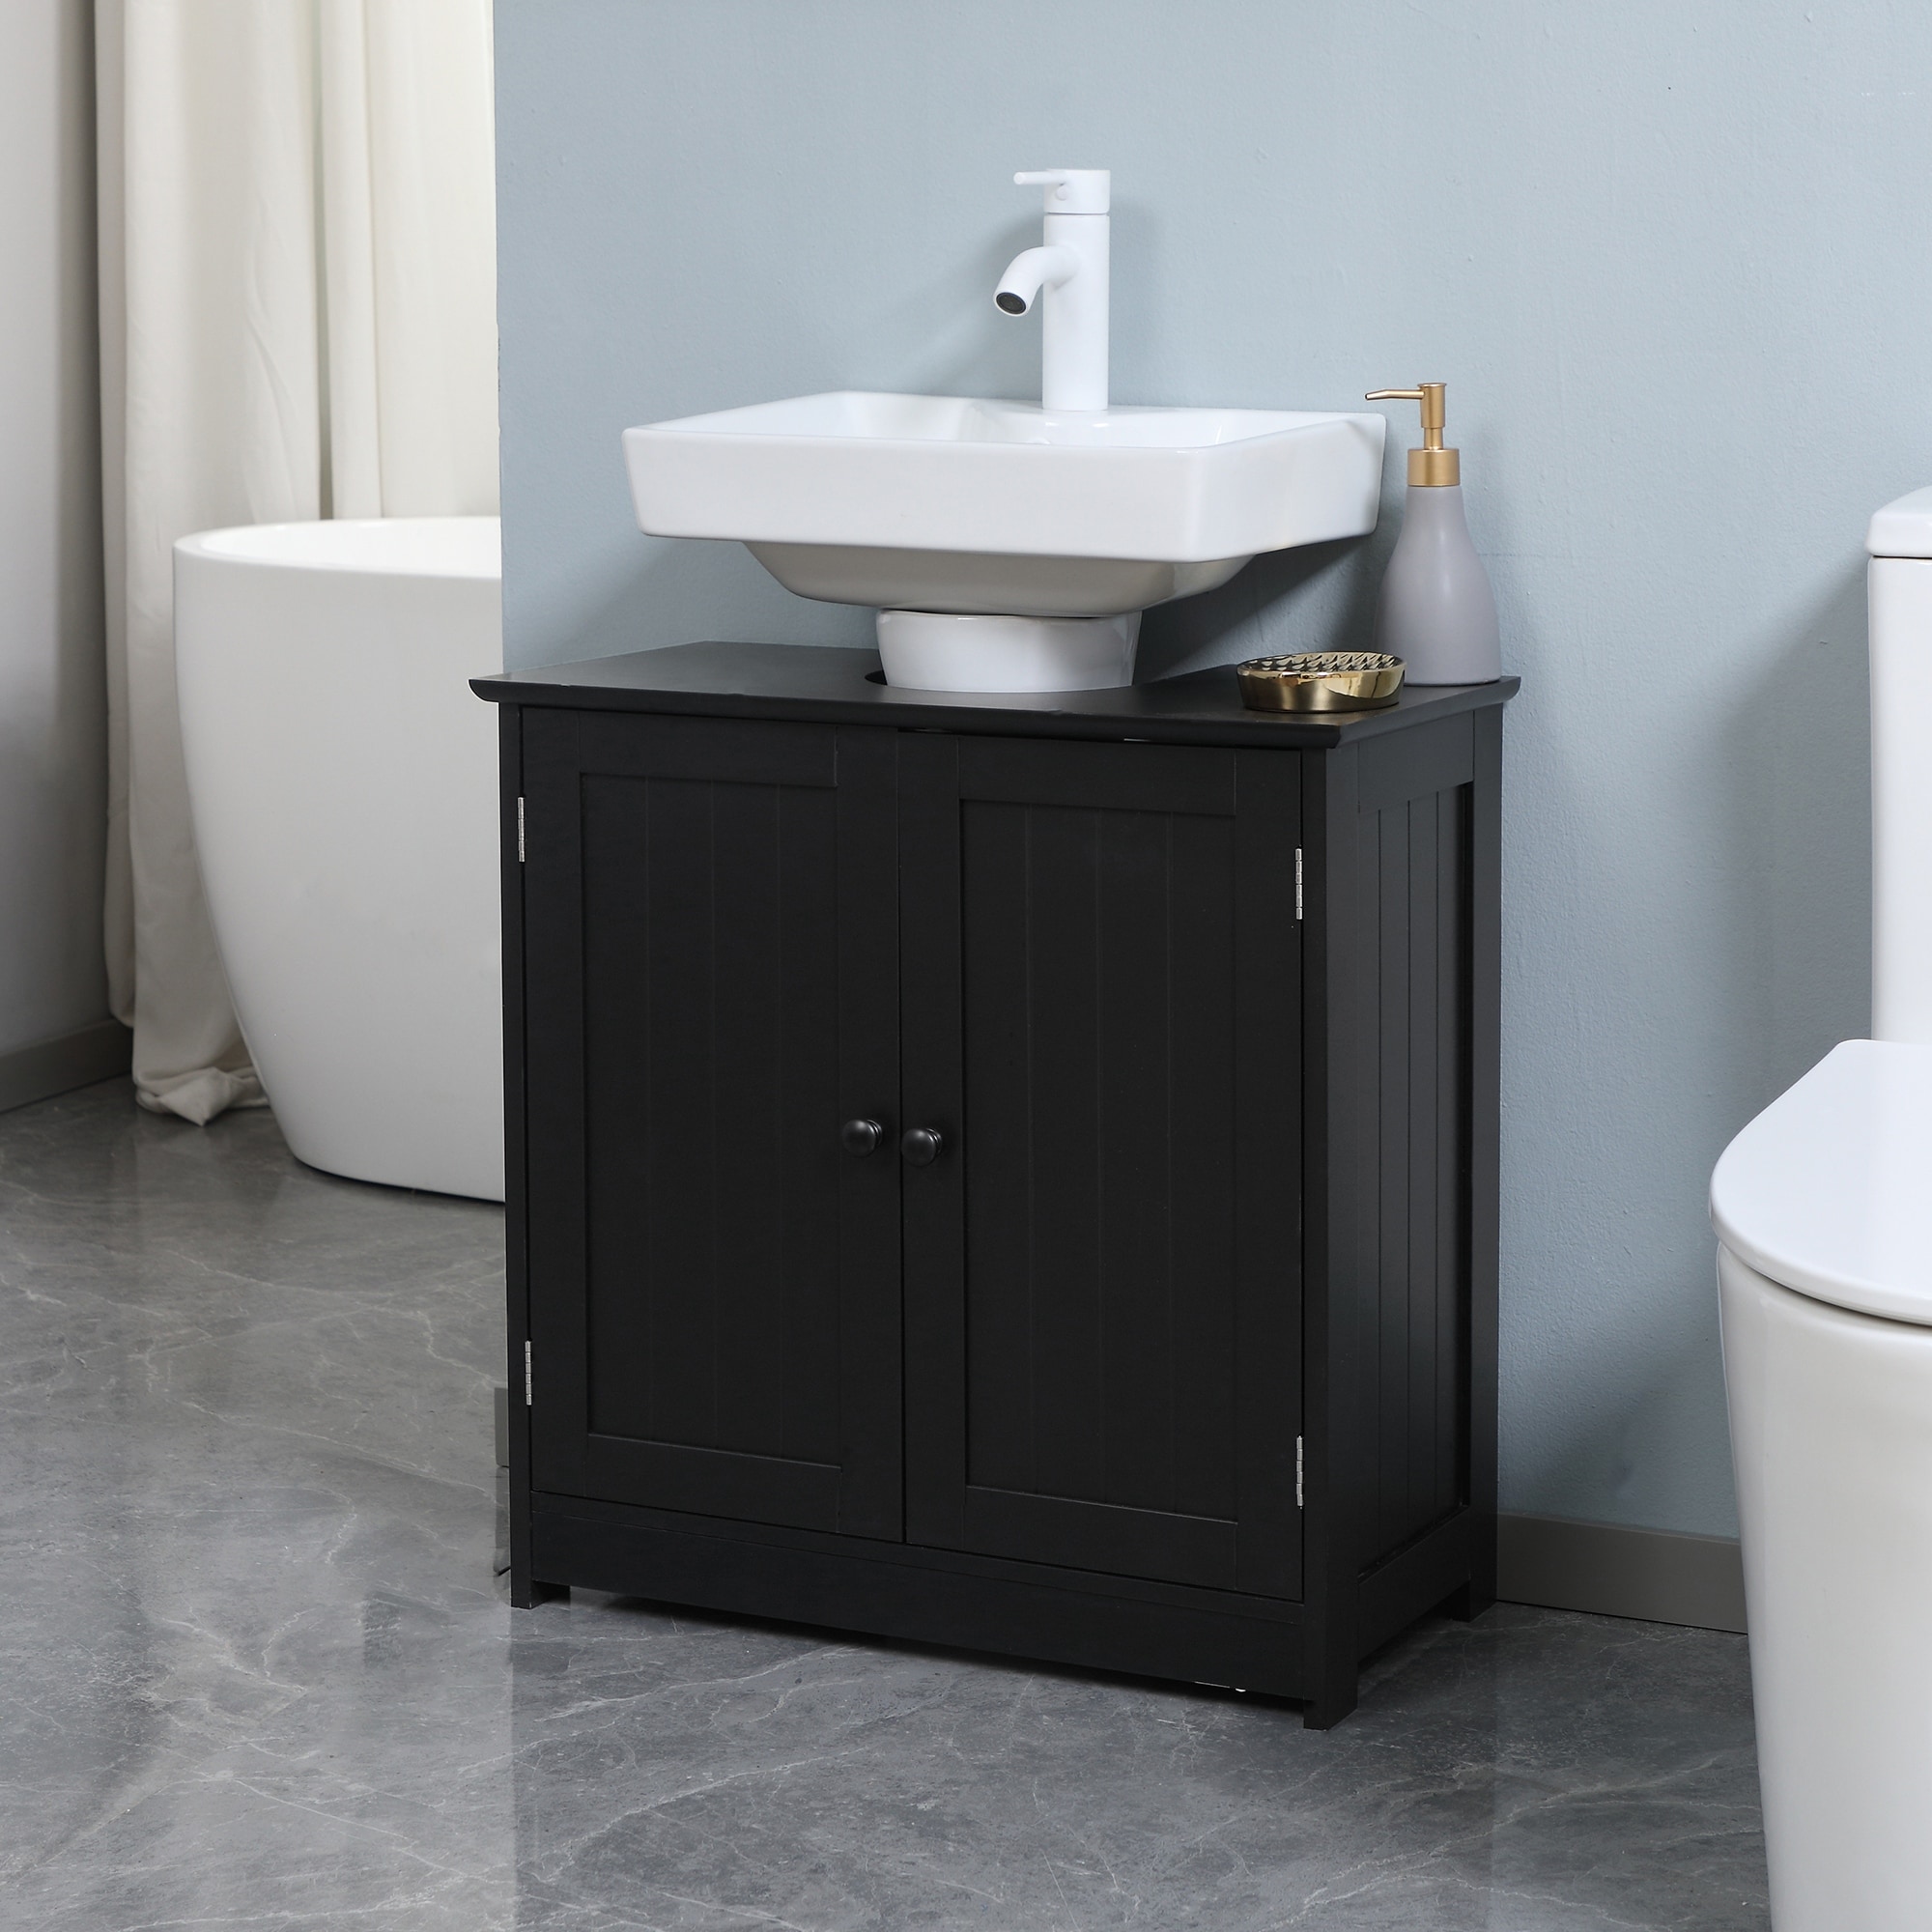 https://ak1.ostkcdn.com/images/products/is/images/direct/59e3e4e44a8012cc65807584c30b33b68a004e13/HOMCOM-Under-Sink-Bathroom-Cabinet-with-2-Doors-and-Shelf%2C-Pedestal-Sink-Bathroom-Vanity-Furniture.jpg